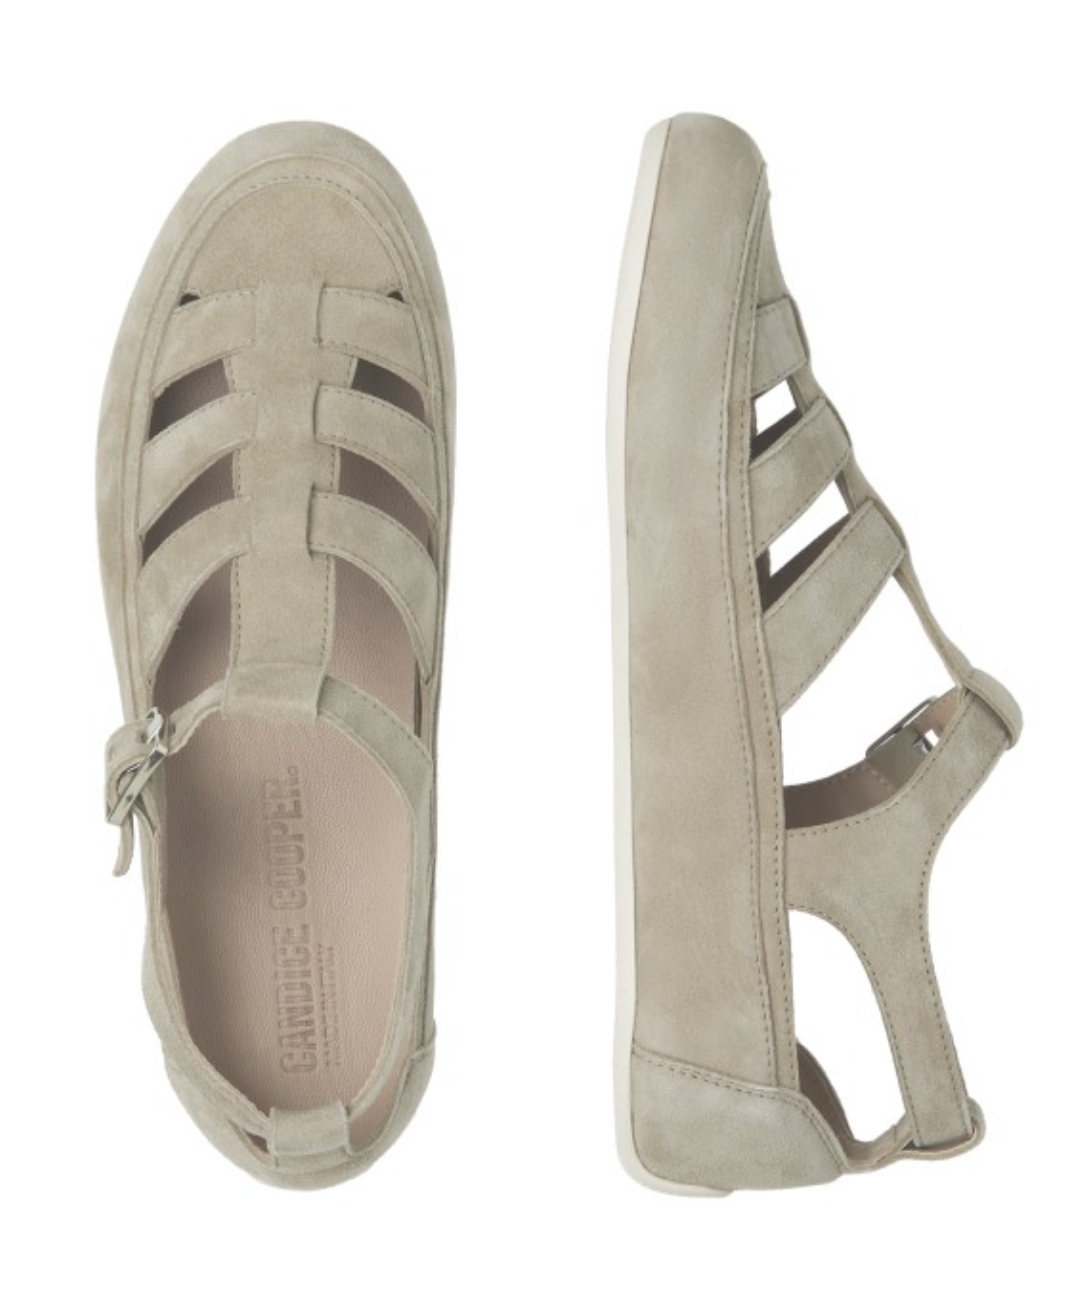 Hetre Alresford Hampshire Shoe Store Candice Cooper Slate Suede T Bar Sandal 